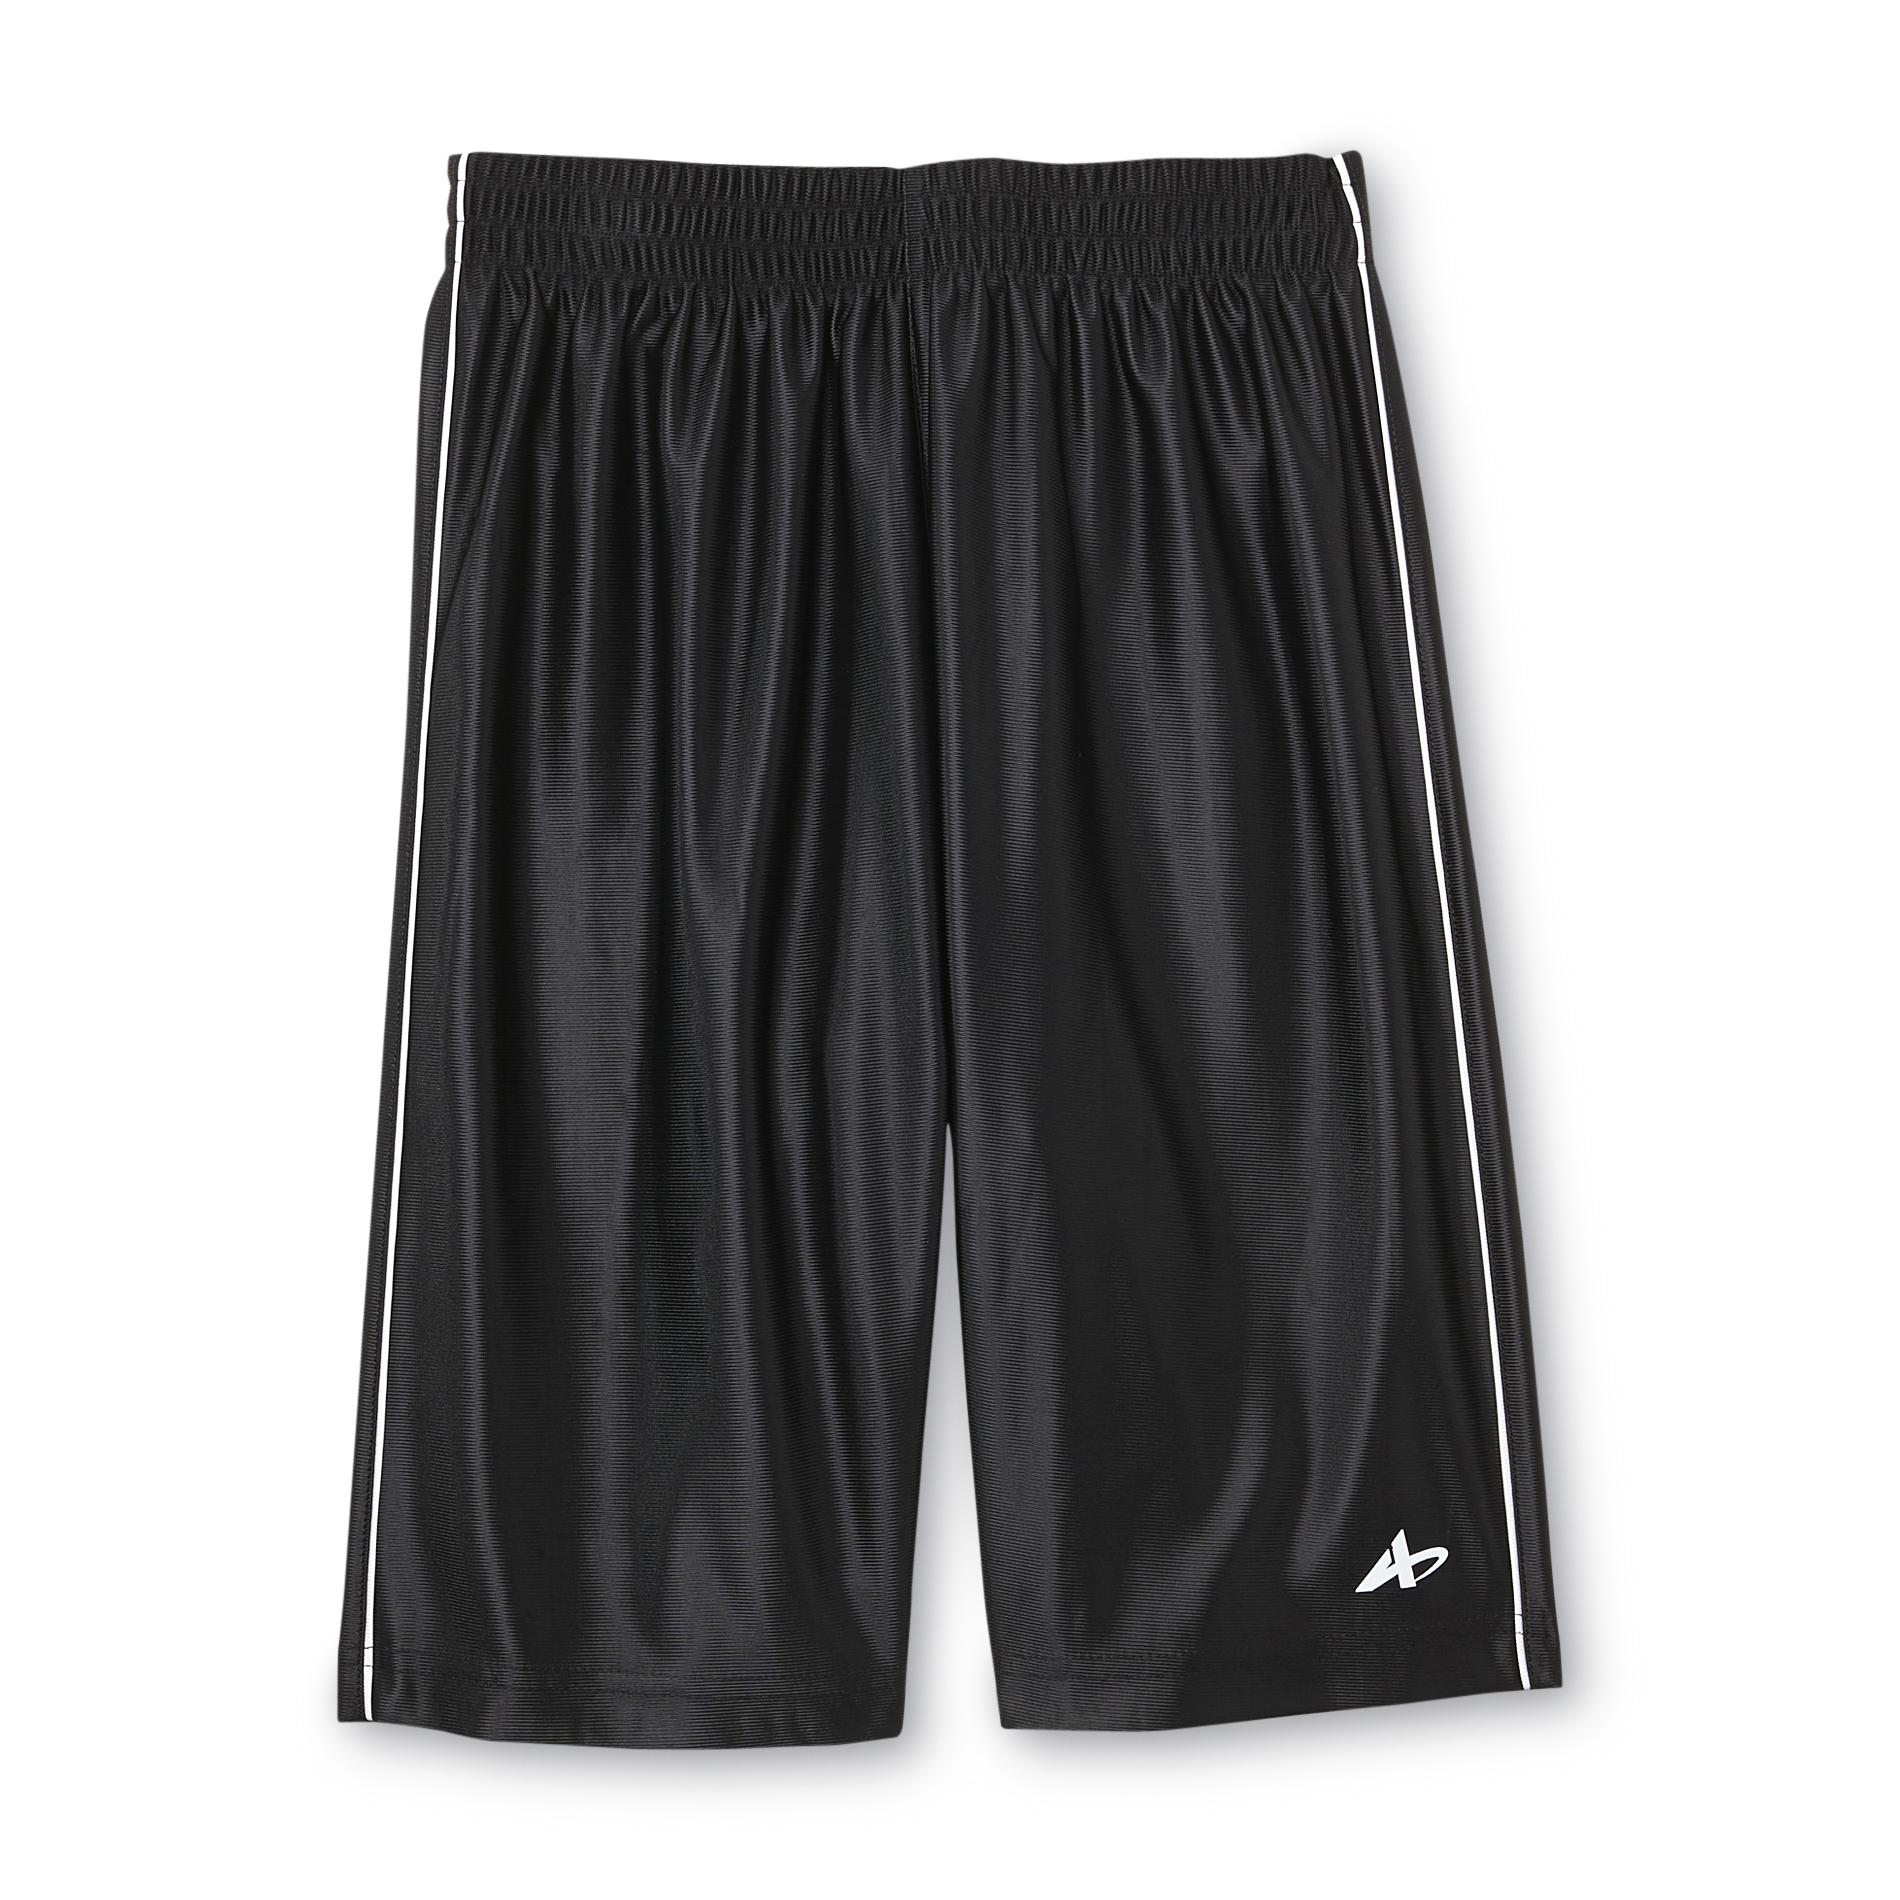 Athletech Boy's Athletic Woven Shorts